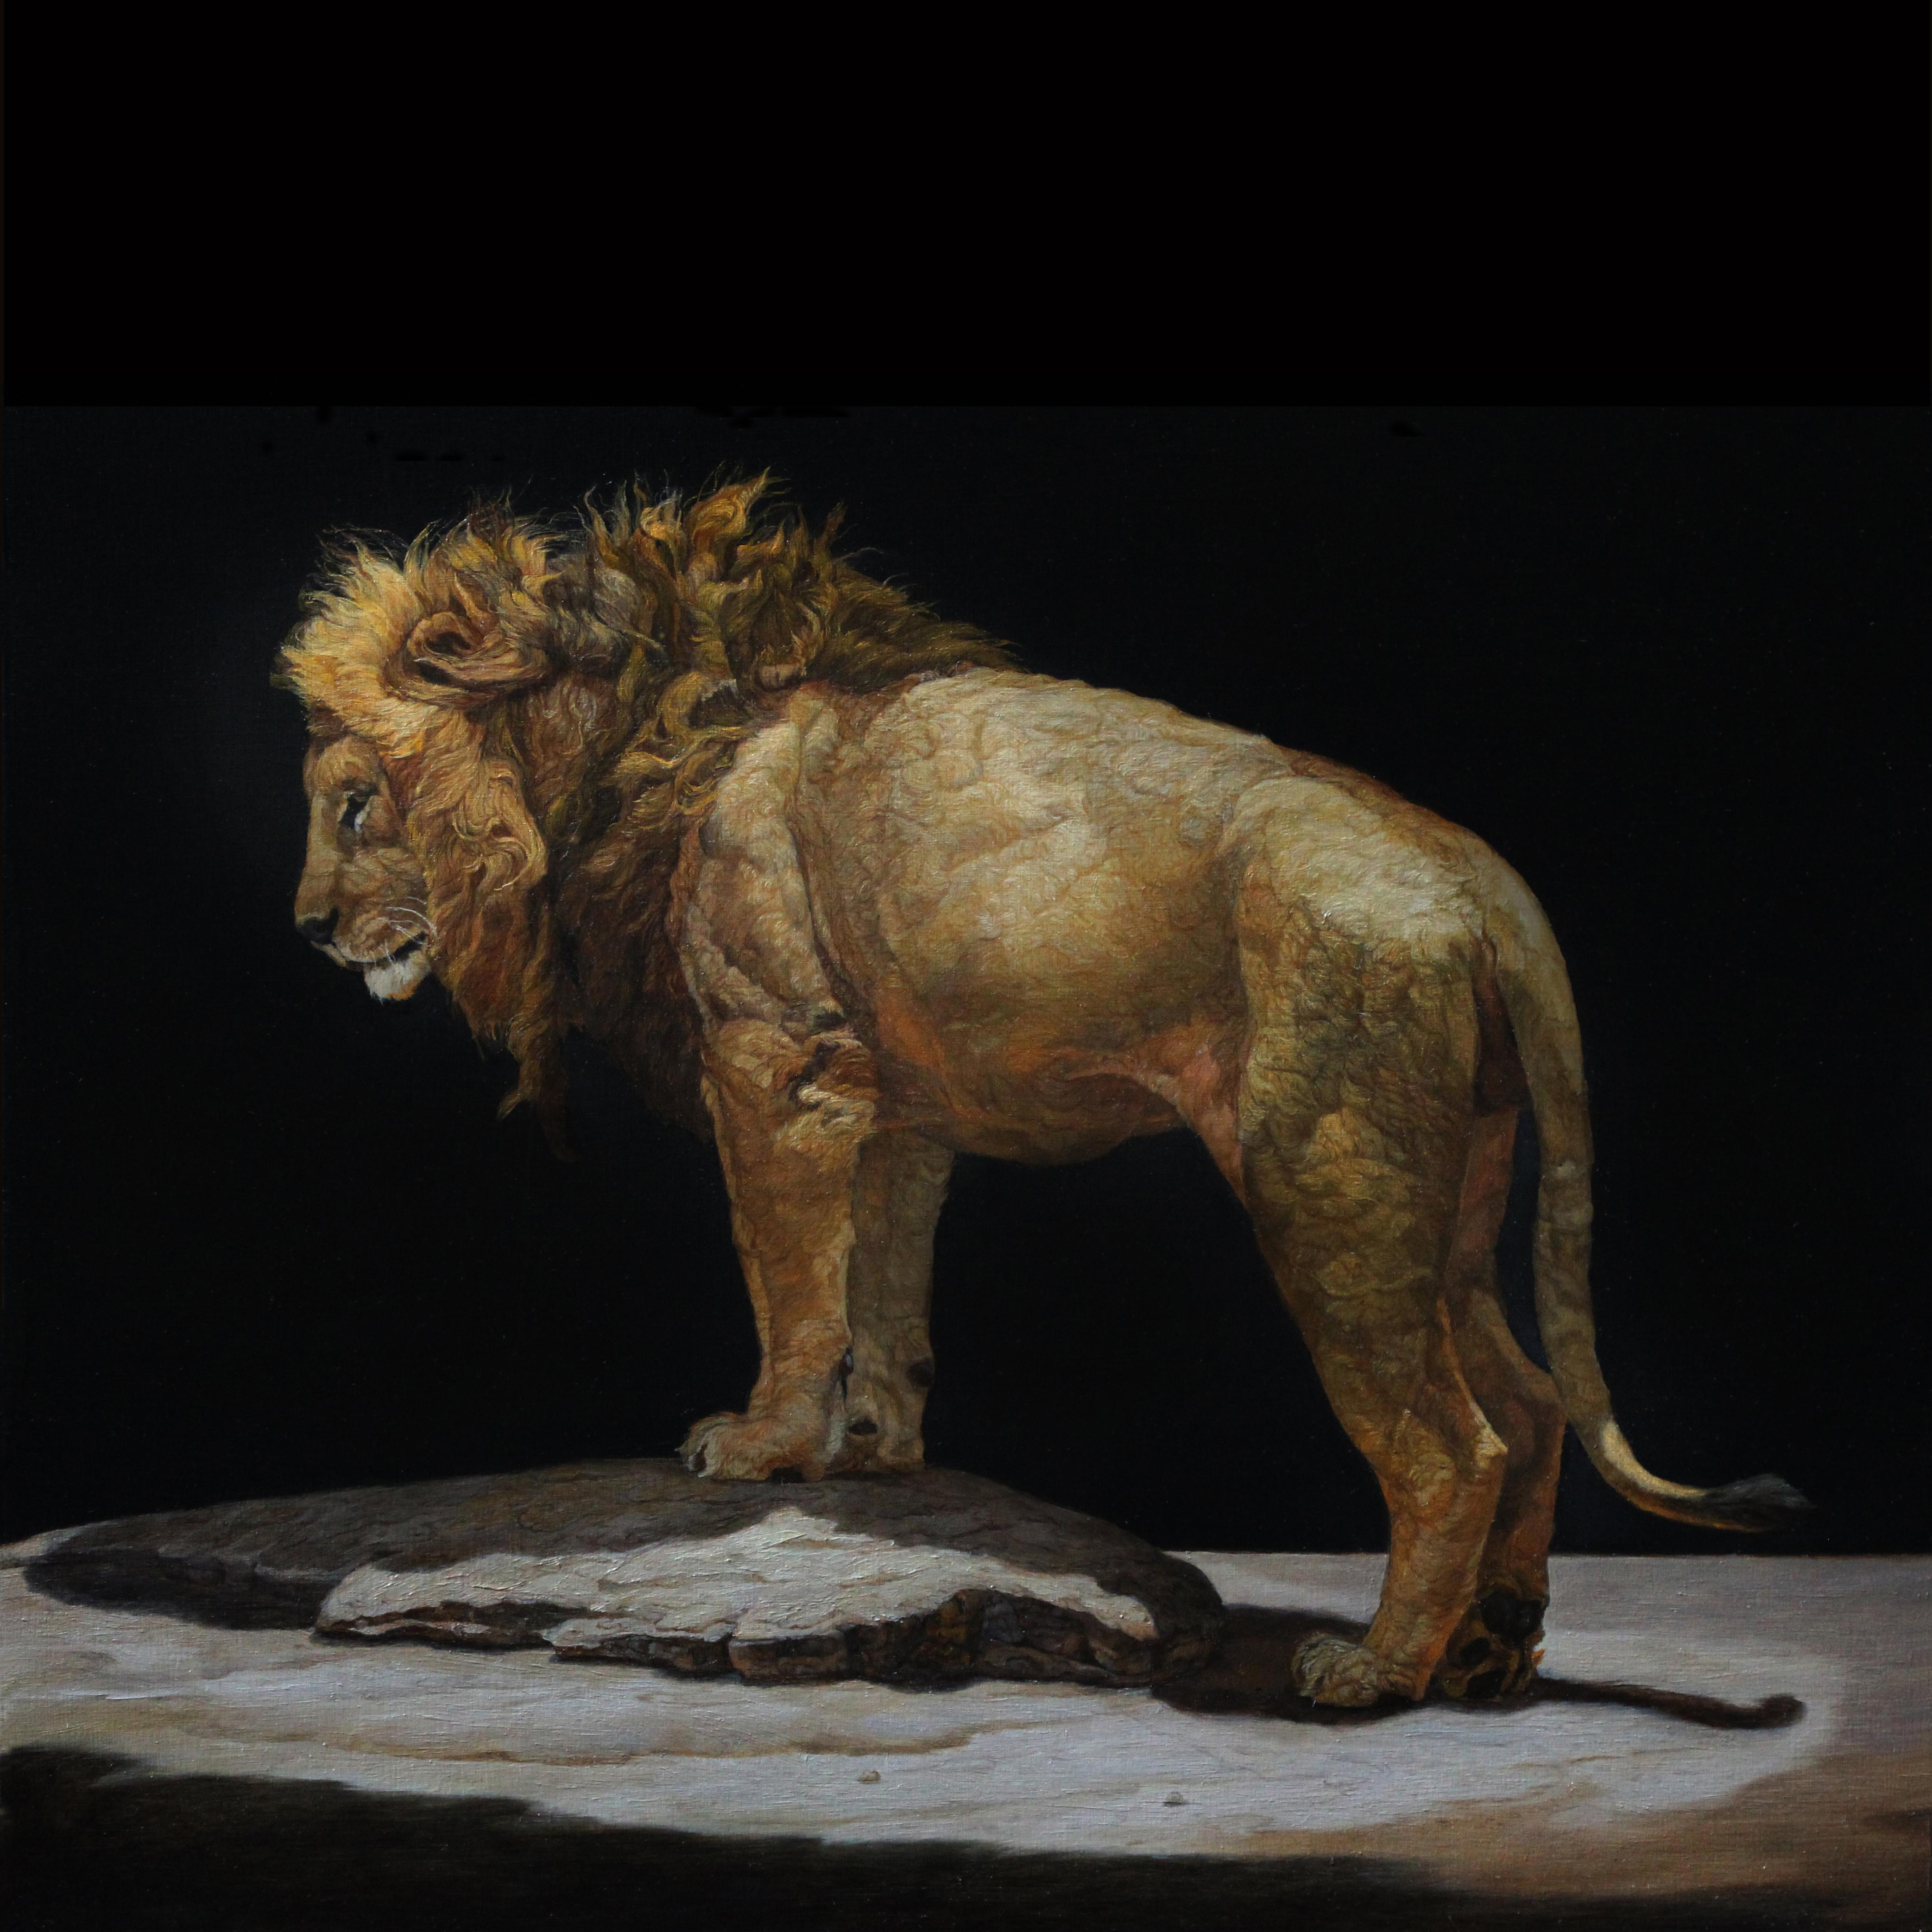 Patricia Traub Animal Painting - LION STANDING ON A KOPJES, Animal Portrait, Realism, Africa, Tanzania, Dark